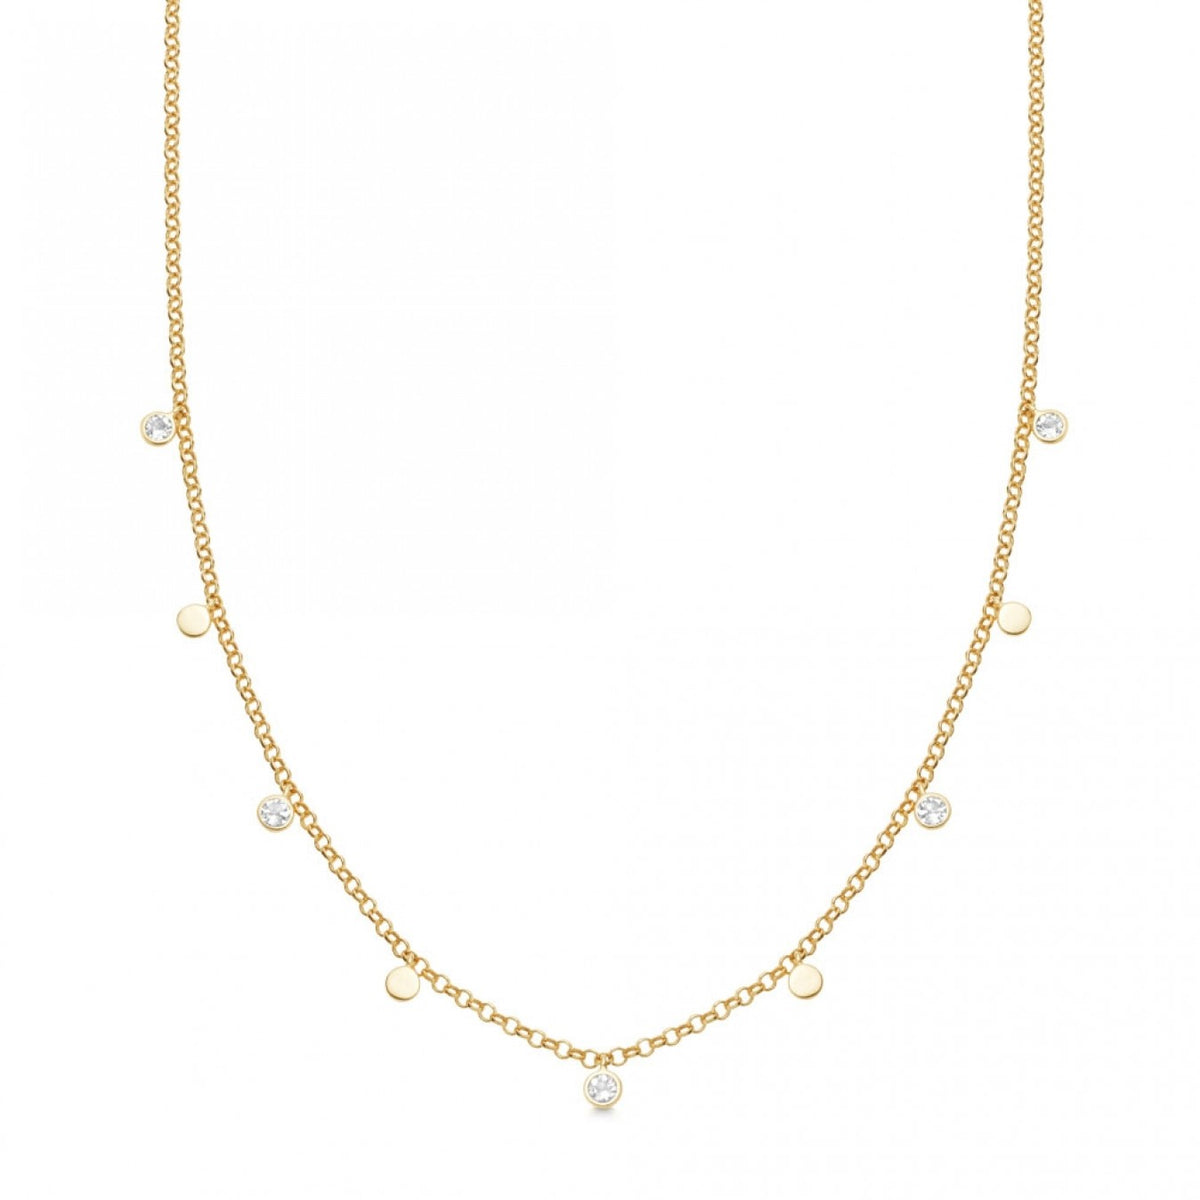 Astley Clarke moonstone droplet necklace